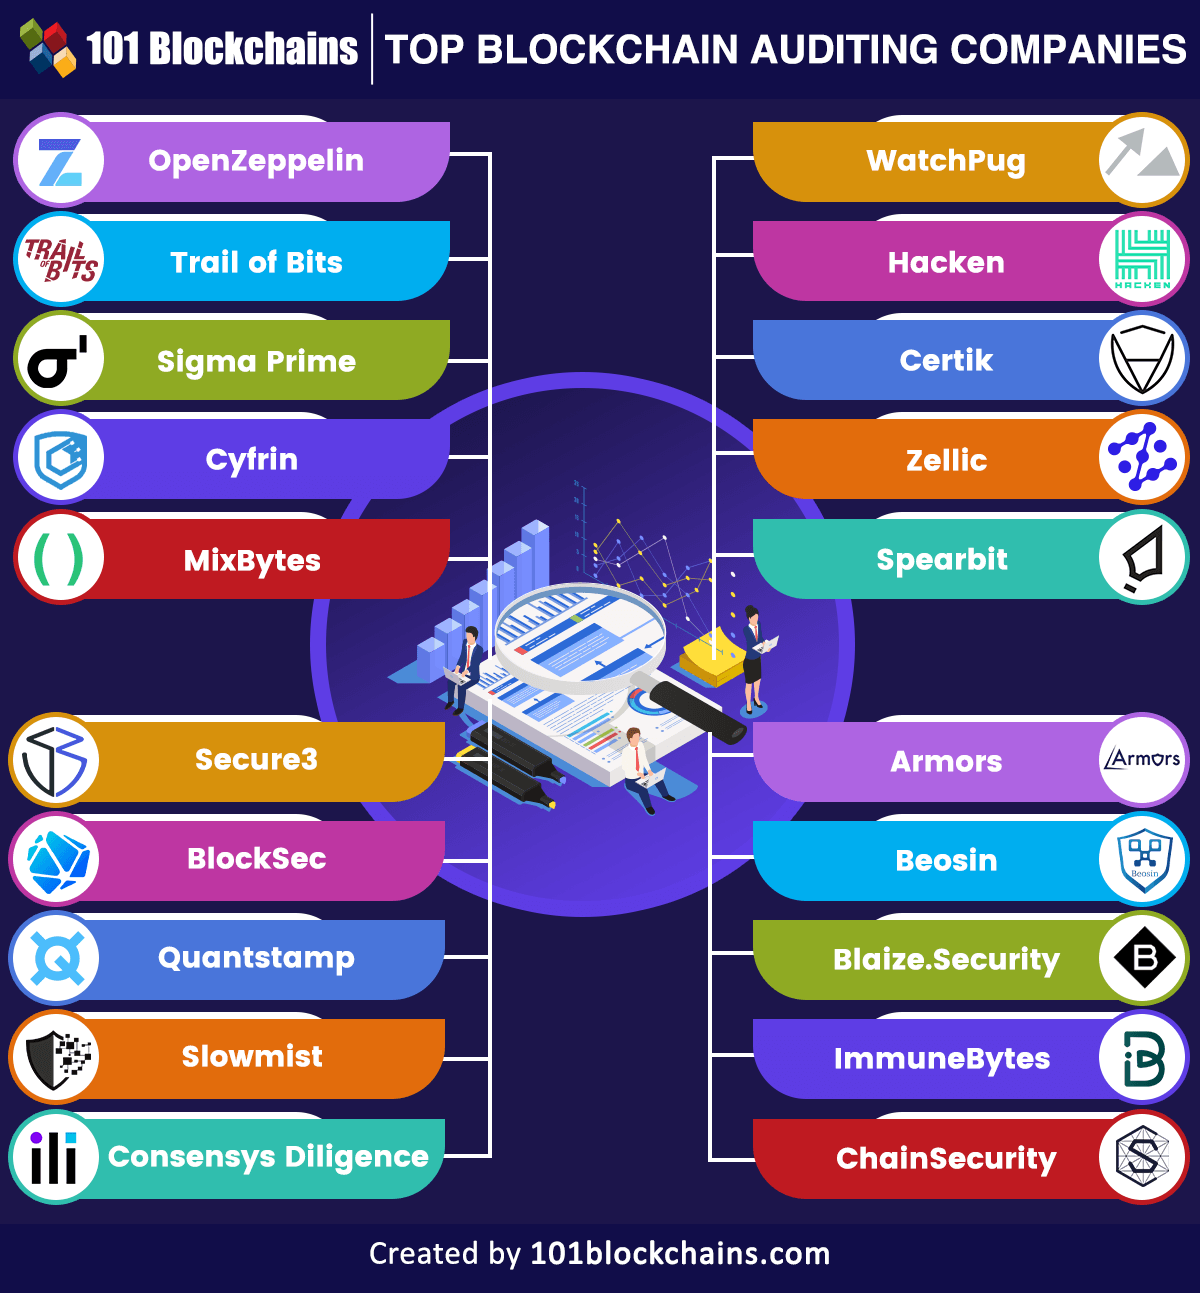 Top Blockchain Auditing Companies